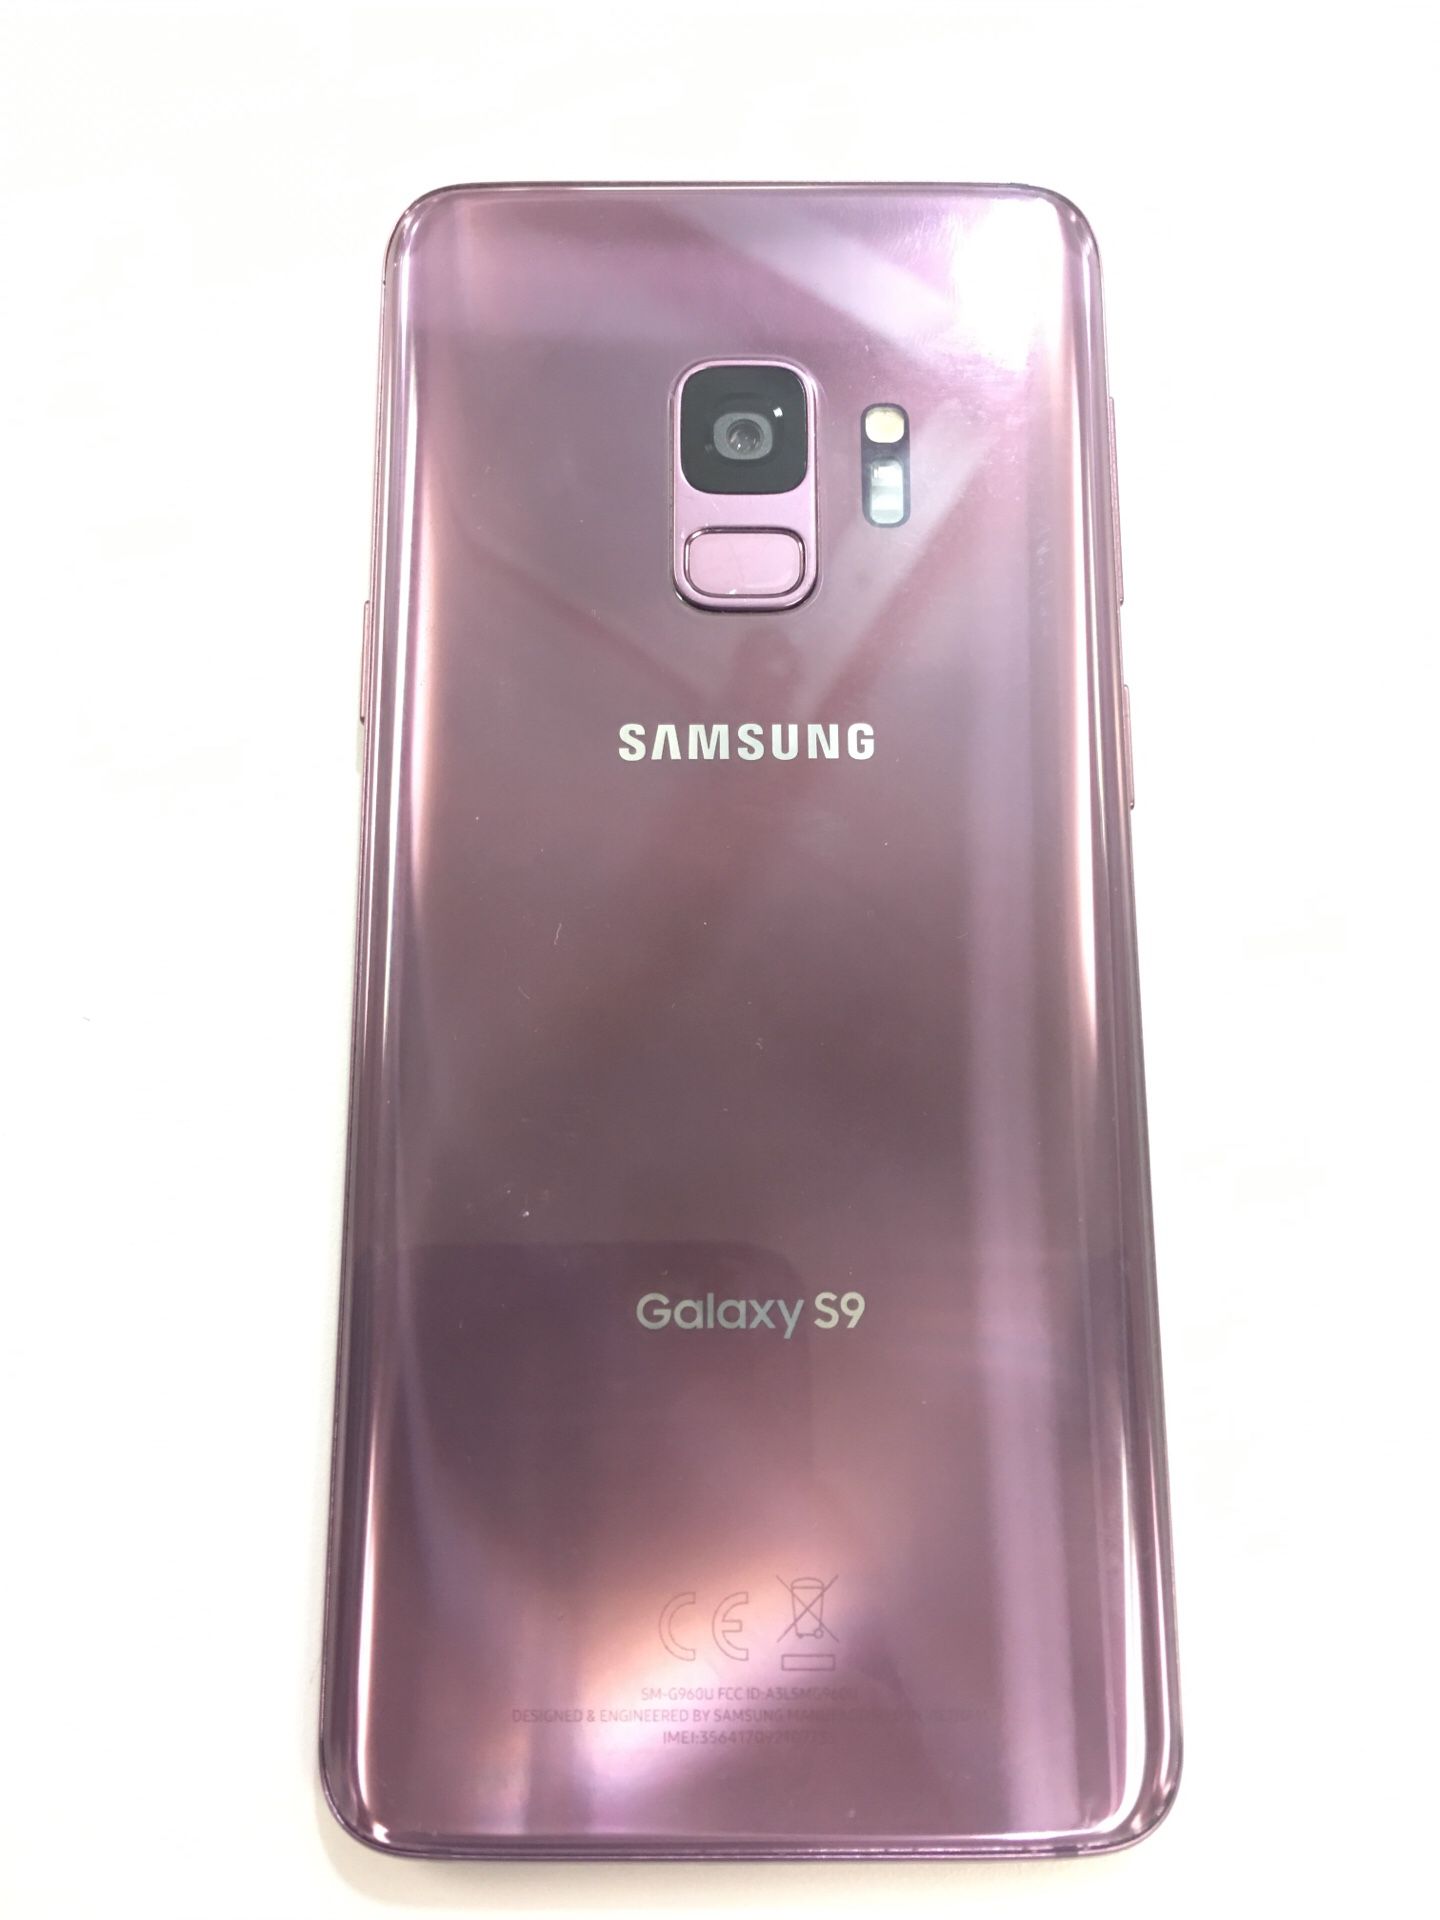 Samsung galaxy S9 (Cracked Screen)